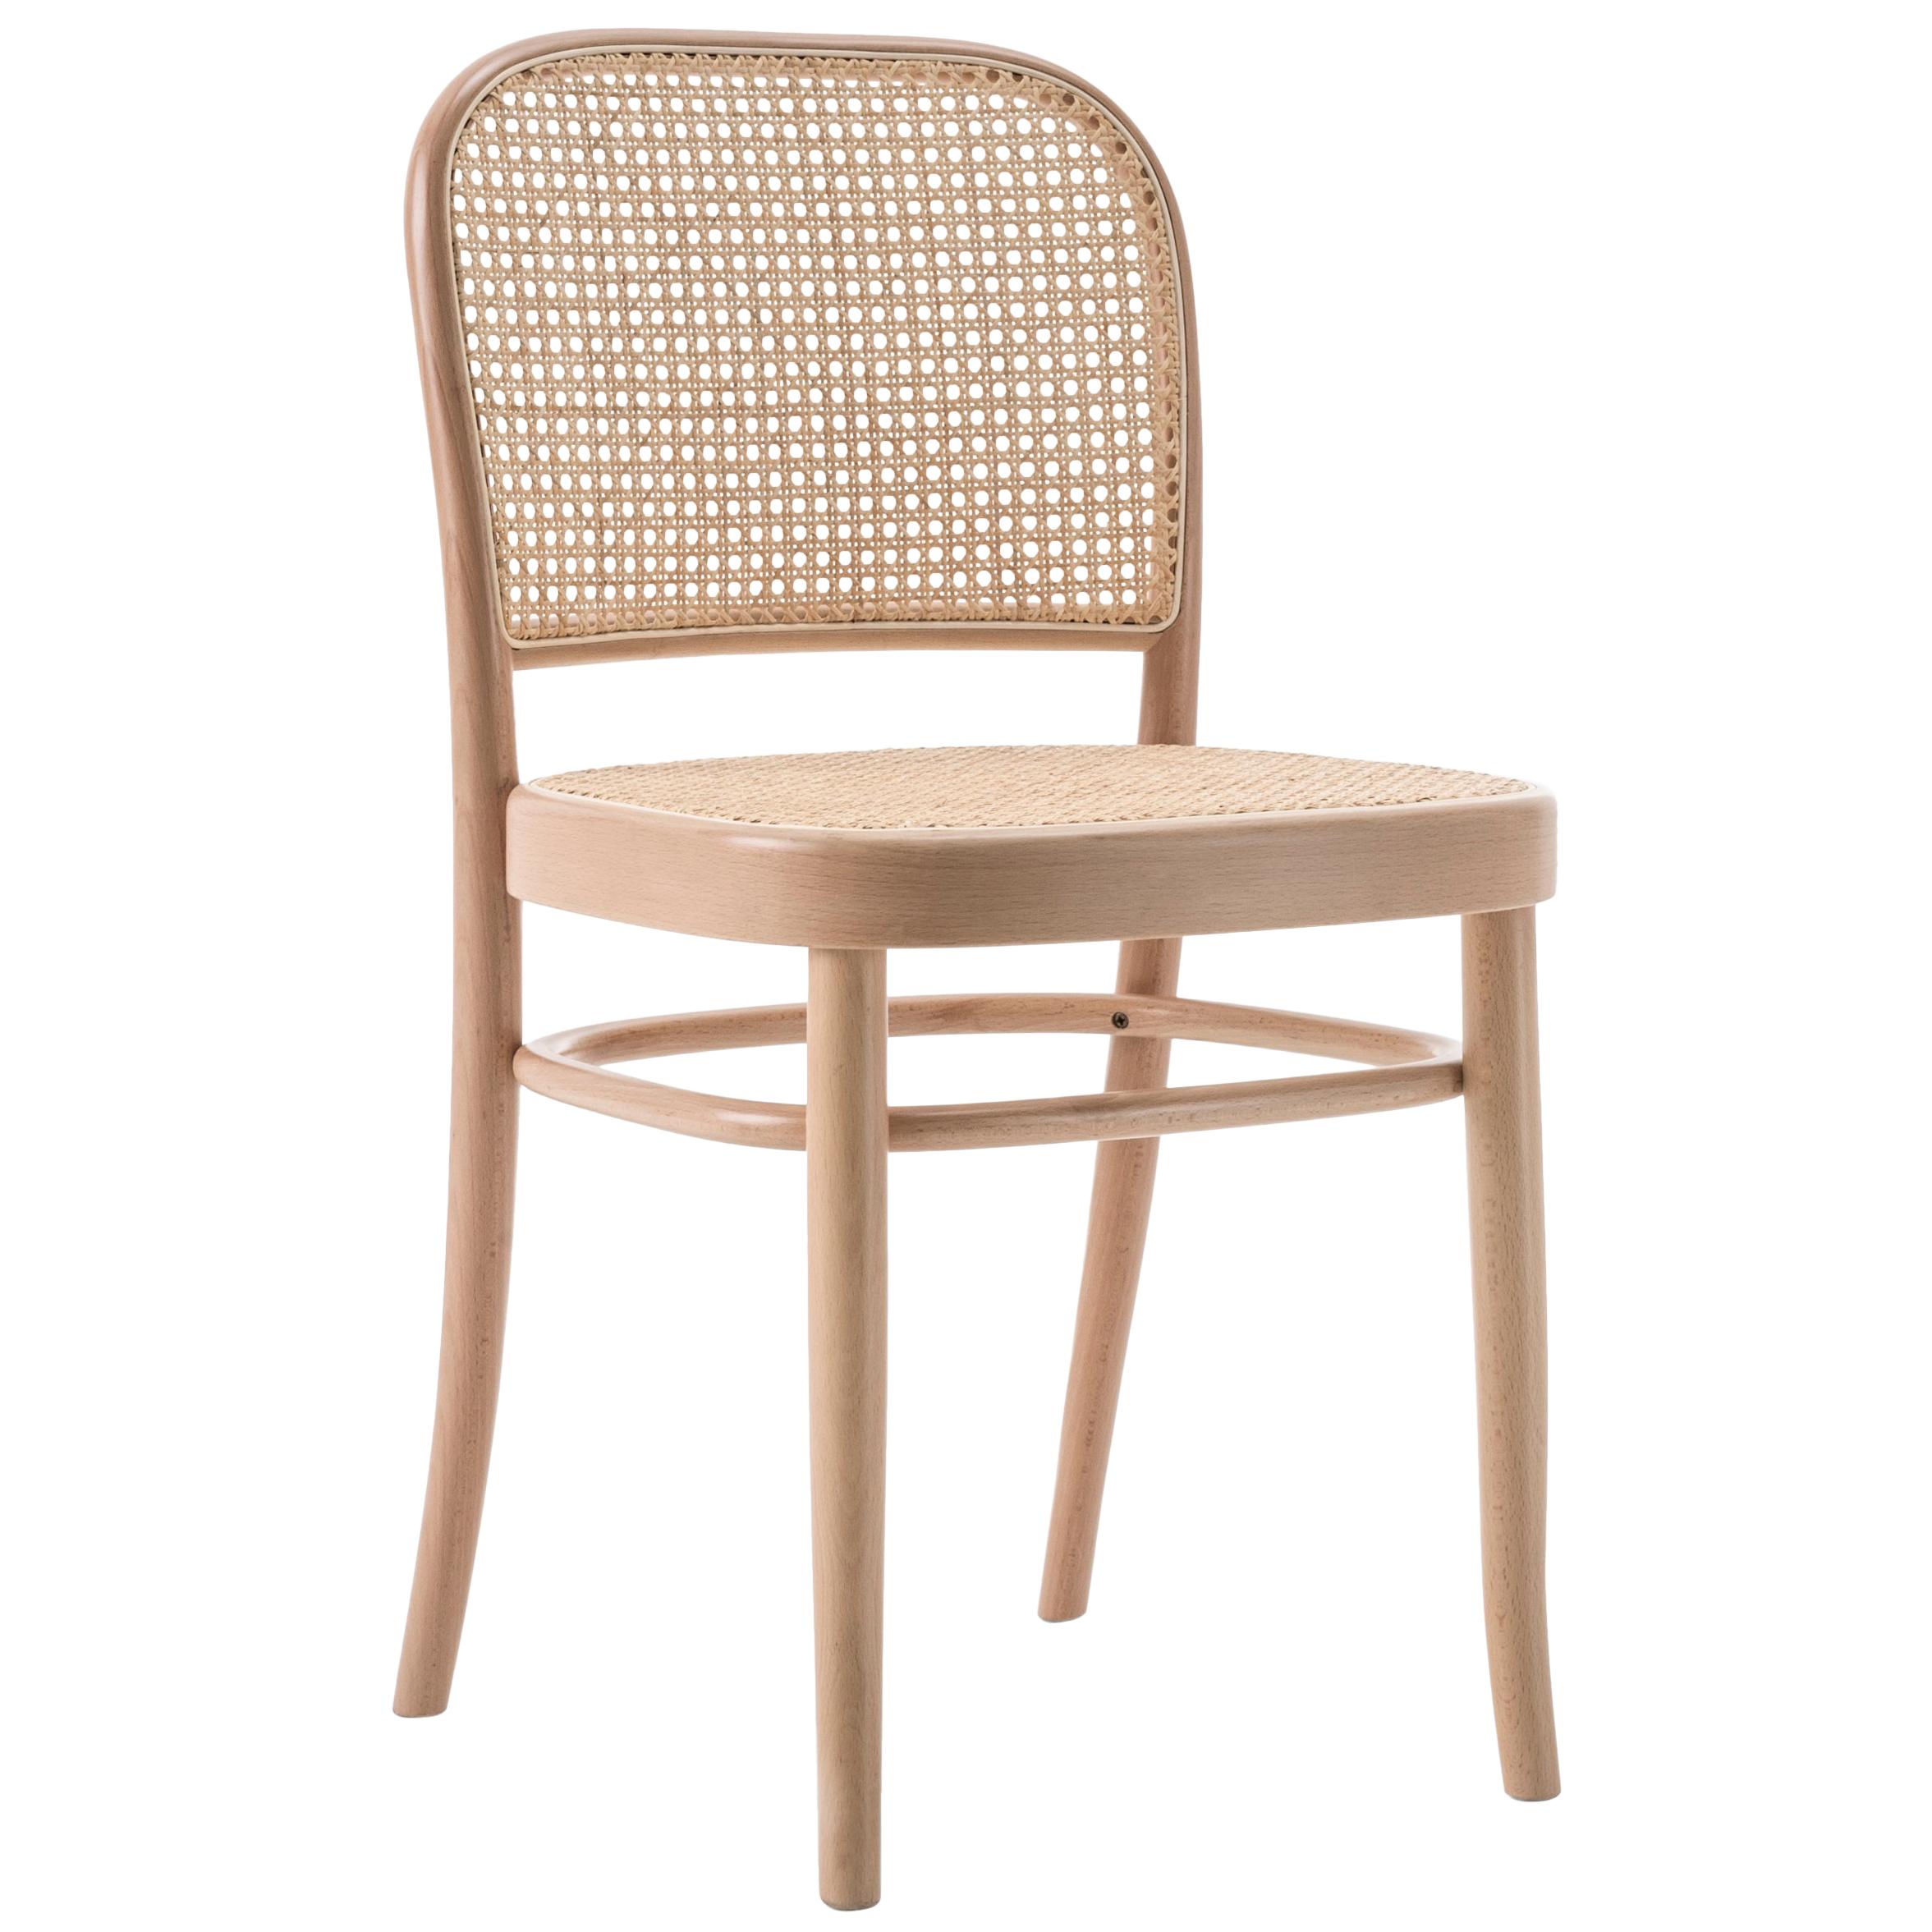 Gebrüder Thonet Vienna GmbH N.811 Chair in Beechwood with Cane Seat